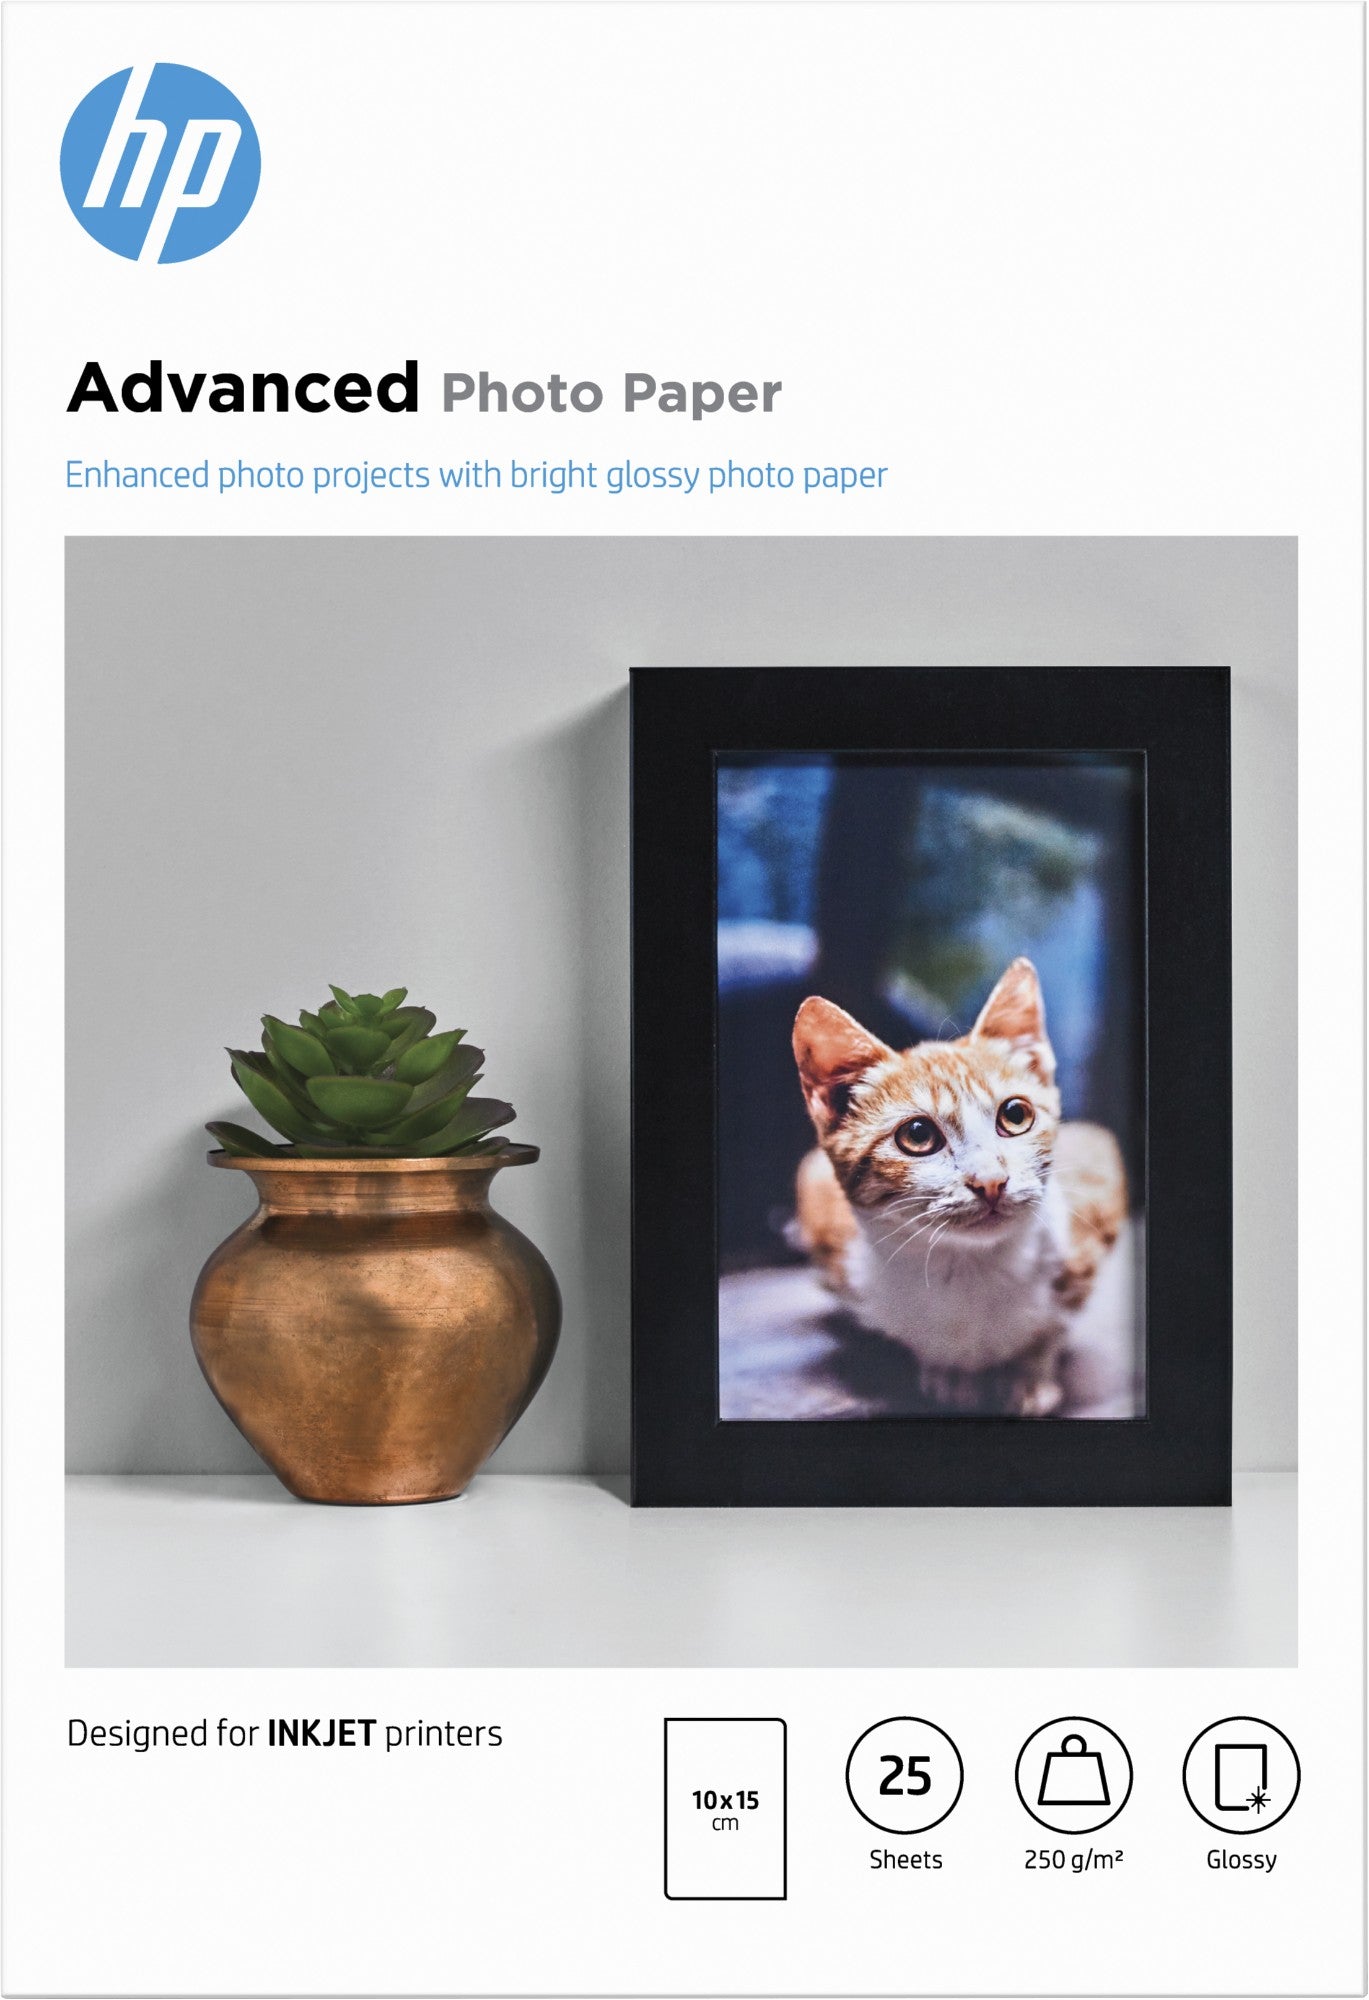 HP Advanced Photo Paper, Glossy, 250 g/m2, 10 x 15 cm (101 x 152 mm), 25 sheets